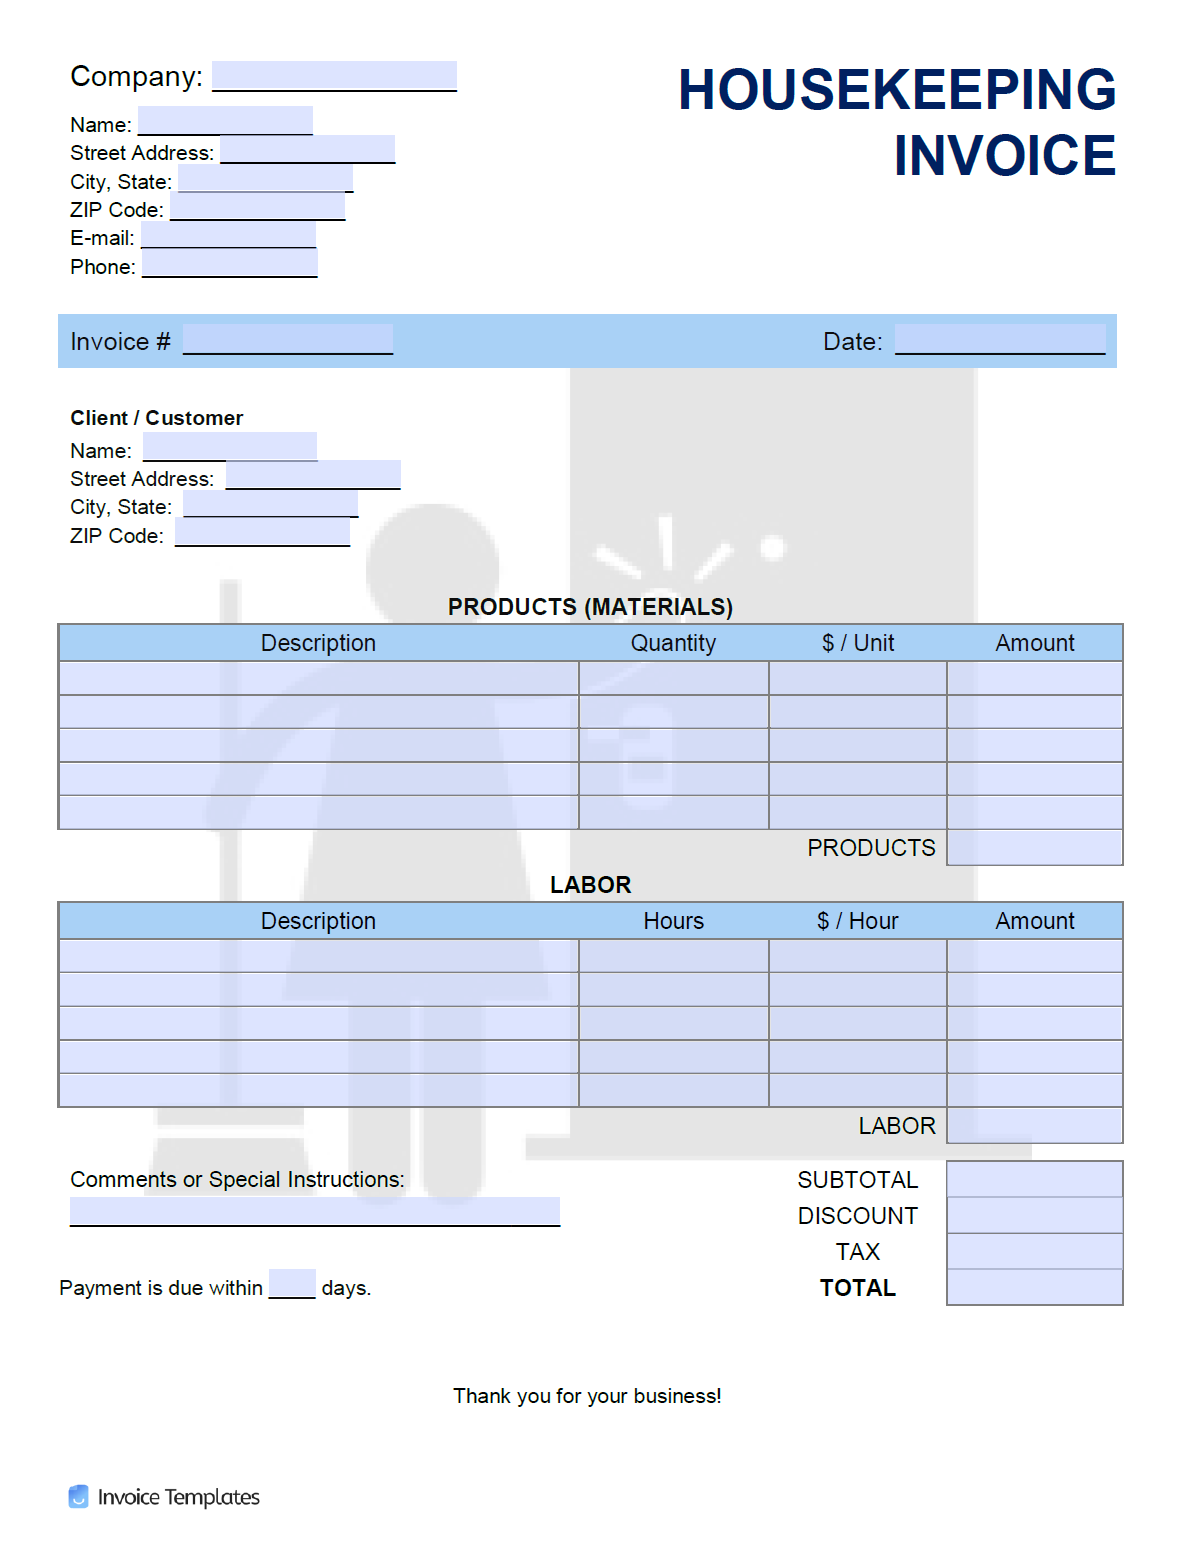 Free Housekeeping Invoice Template  PDF  WORD  EXCEL Inside House Cleaning Invoice Template Free